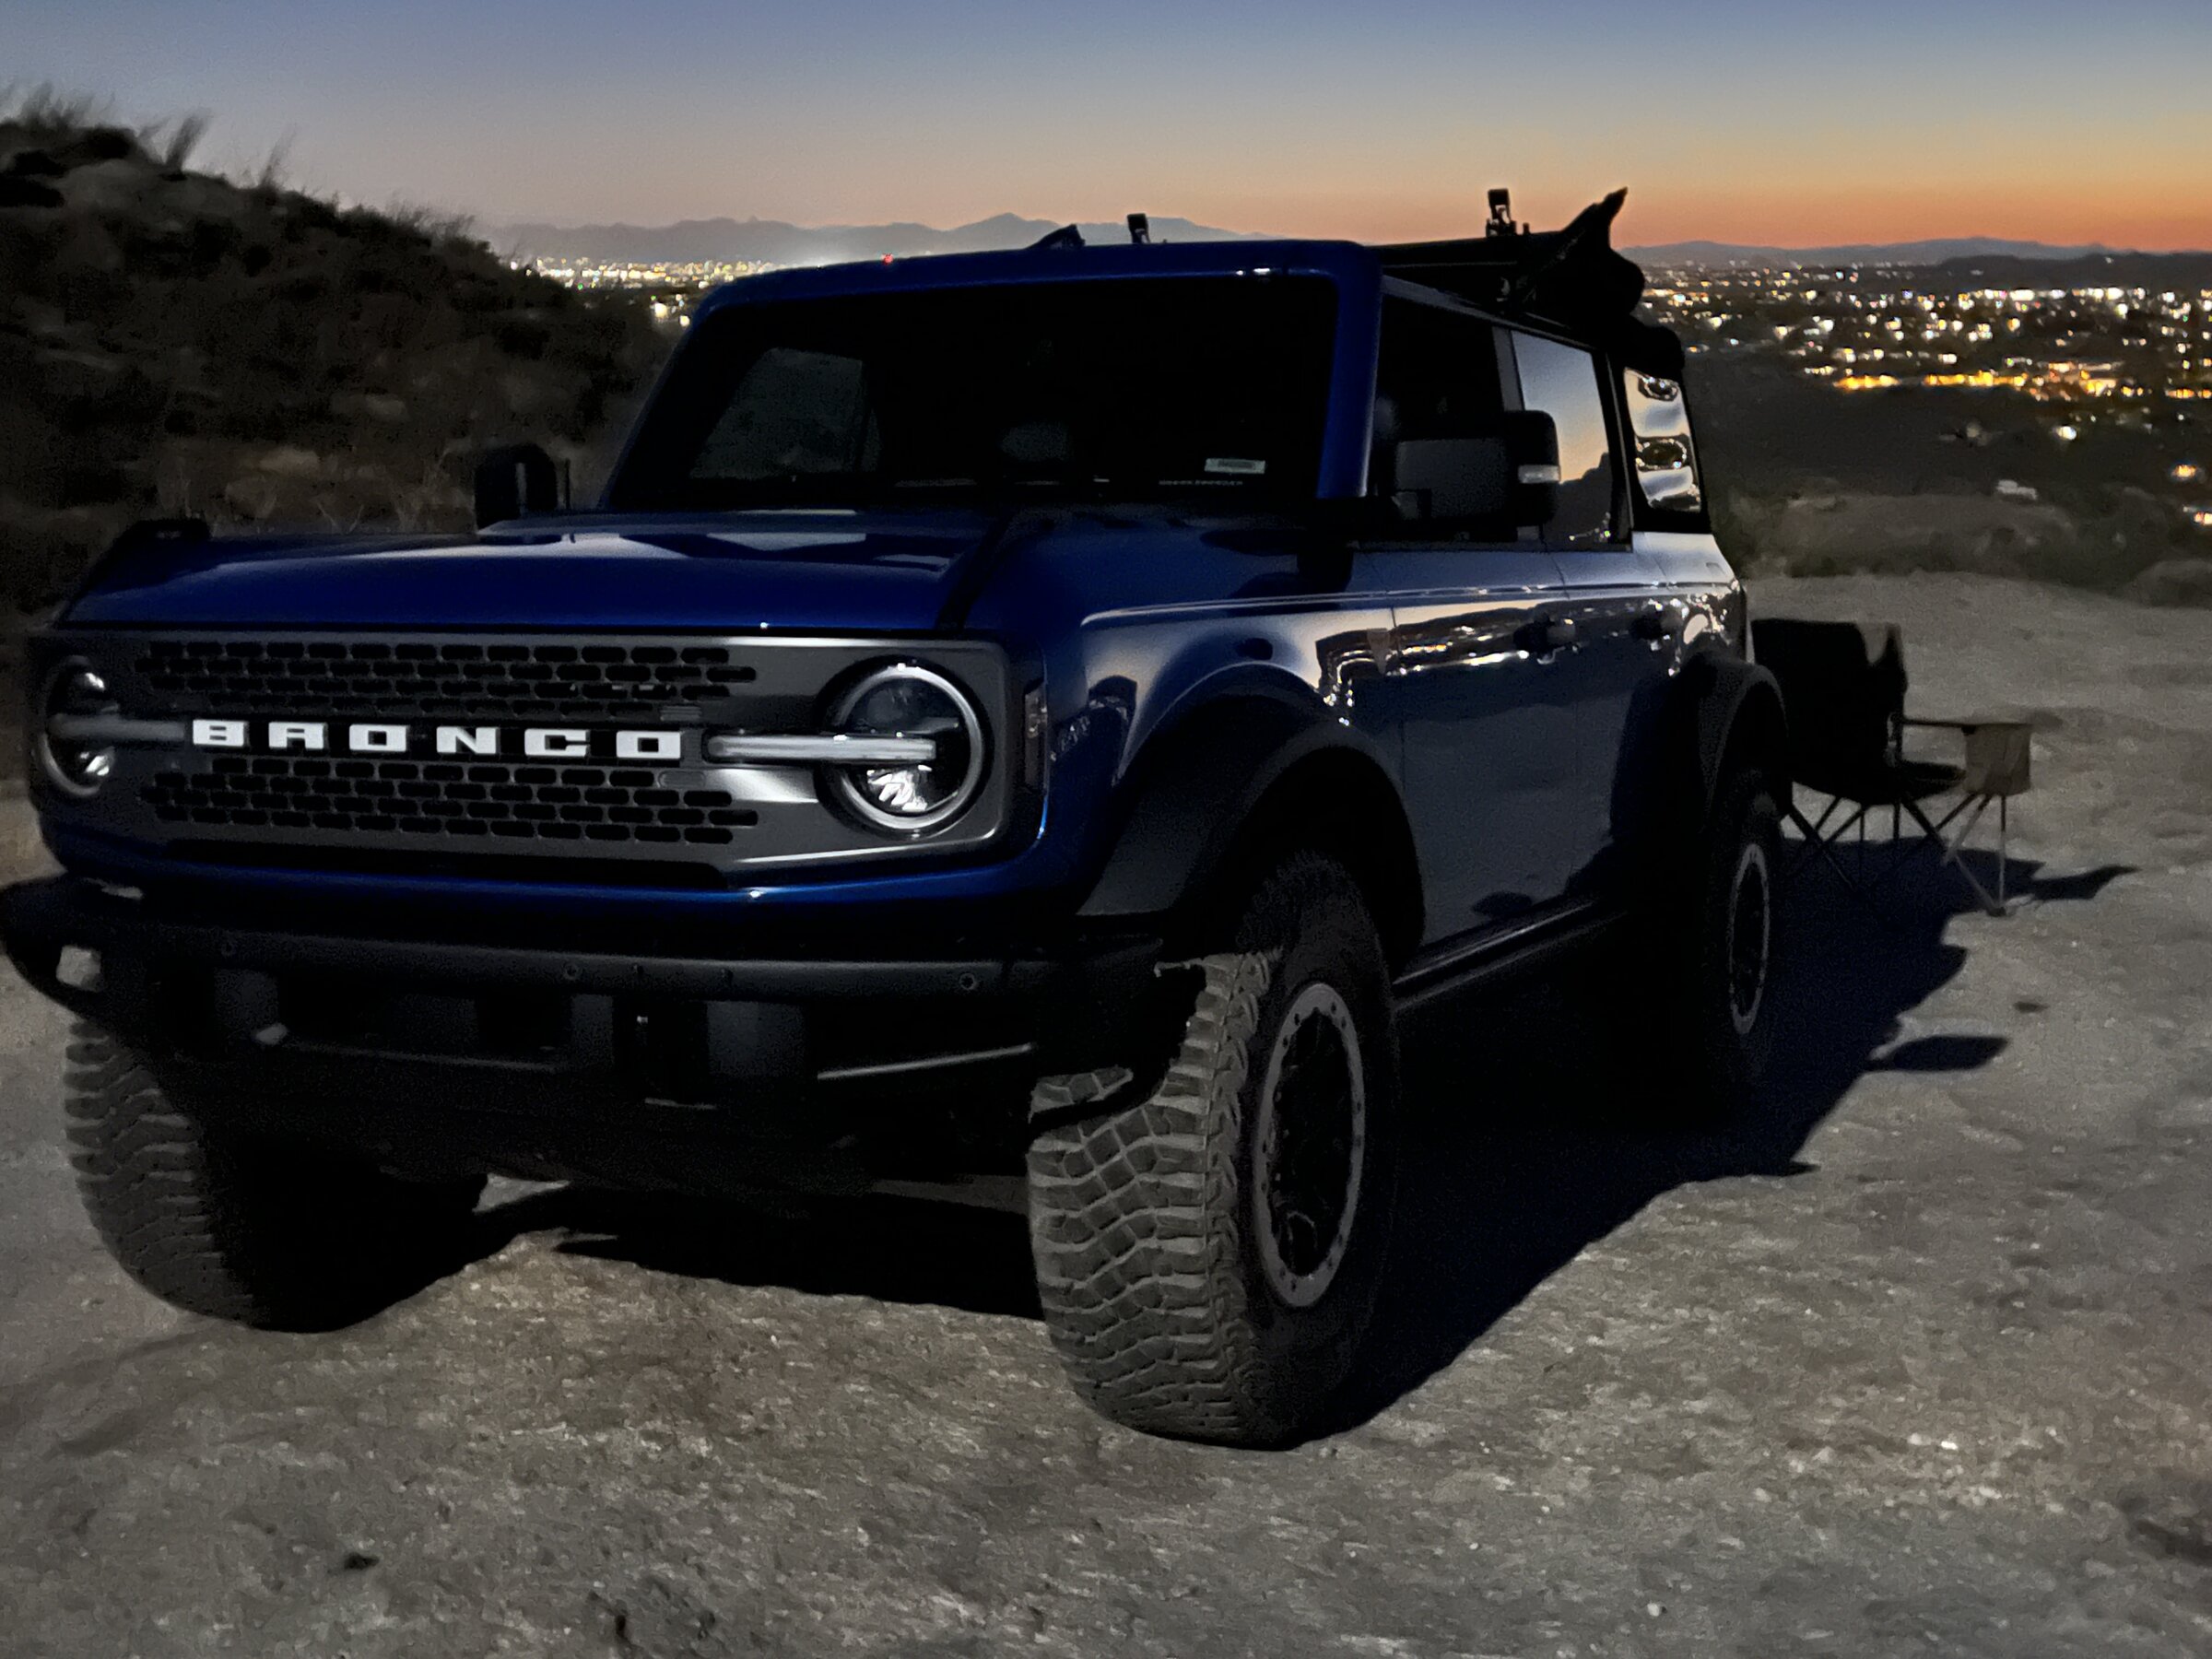 Ford Bronco Rockdawg84's Badsquach 21 Adventure and Build Thread "Wild Blue" IMG_0568 2.JPG